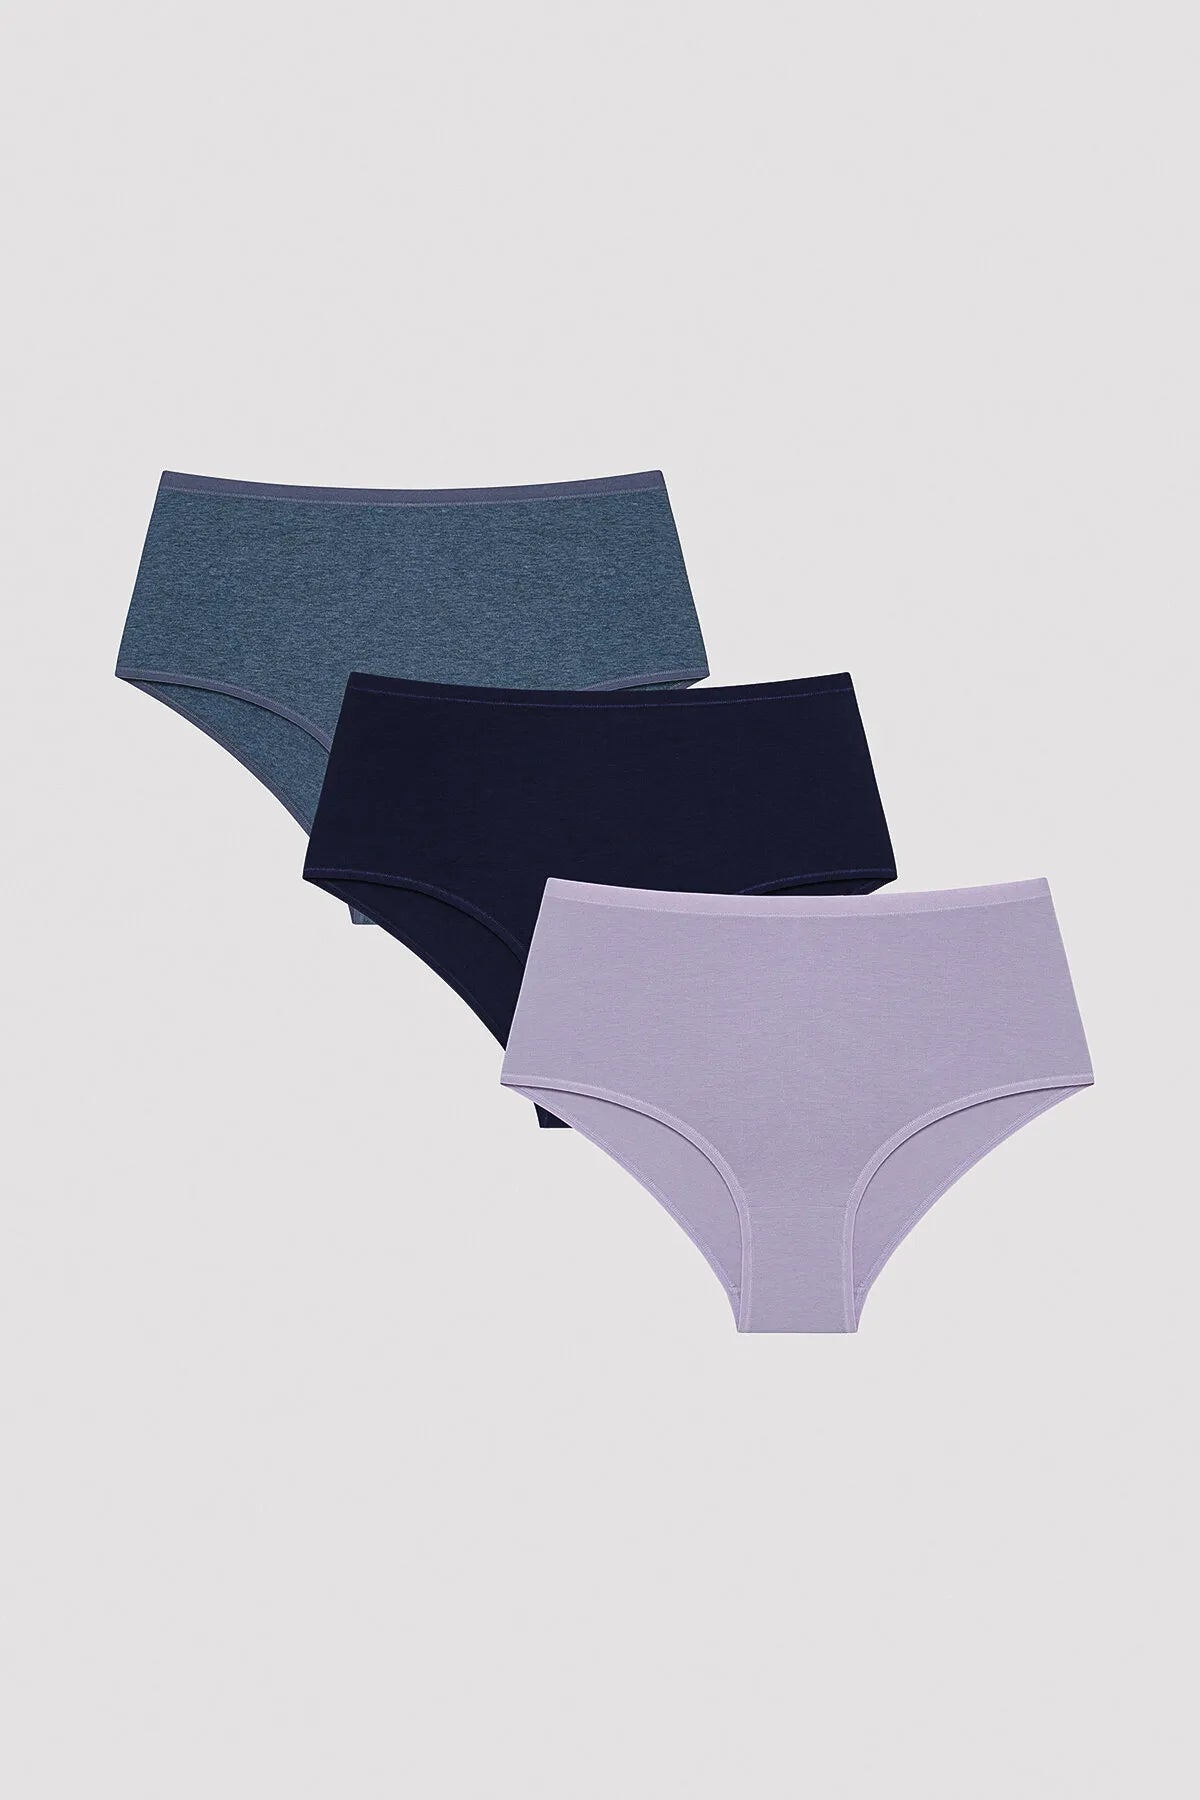 Indigo Night Multicolored 3-Piece High Waist Bikini Underwear Set for Women